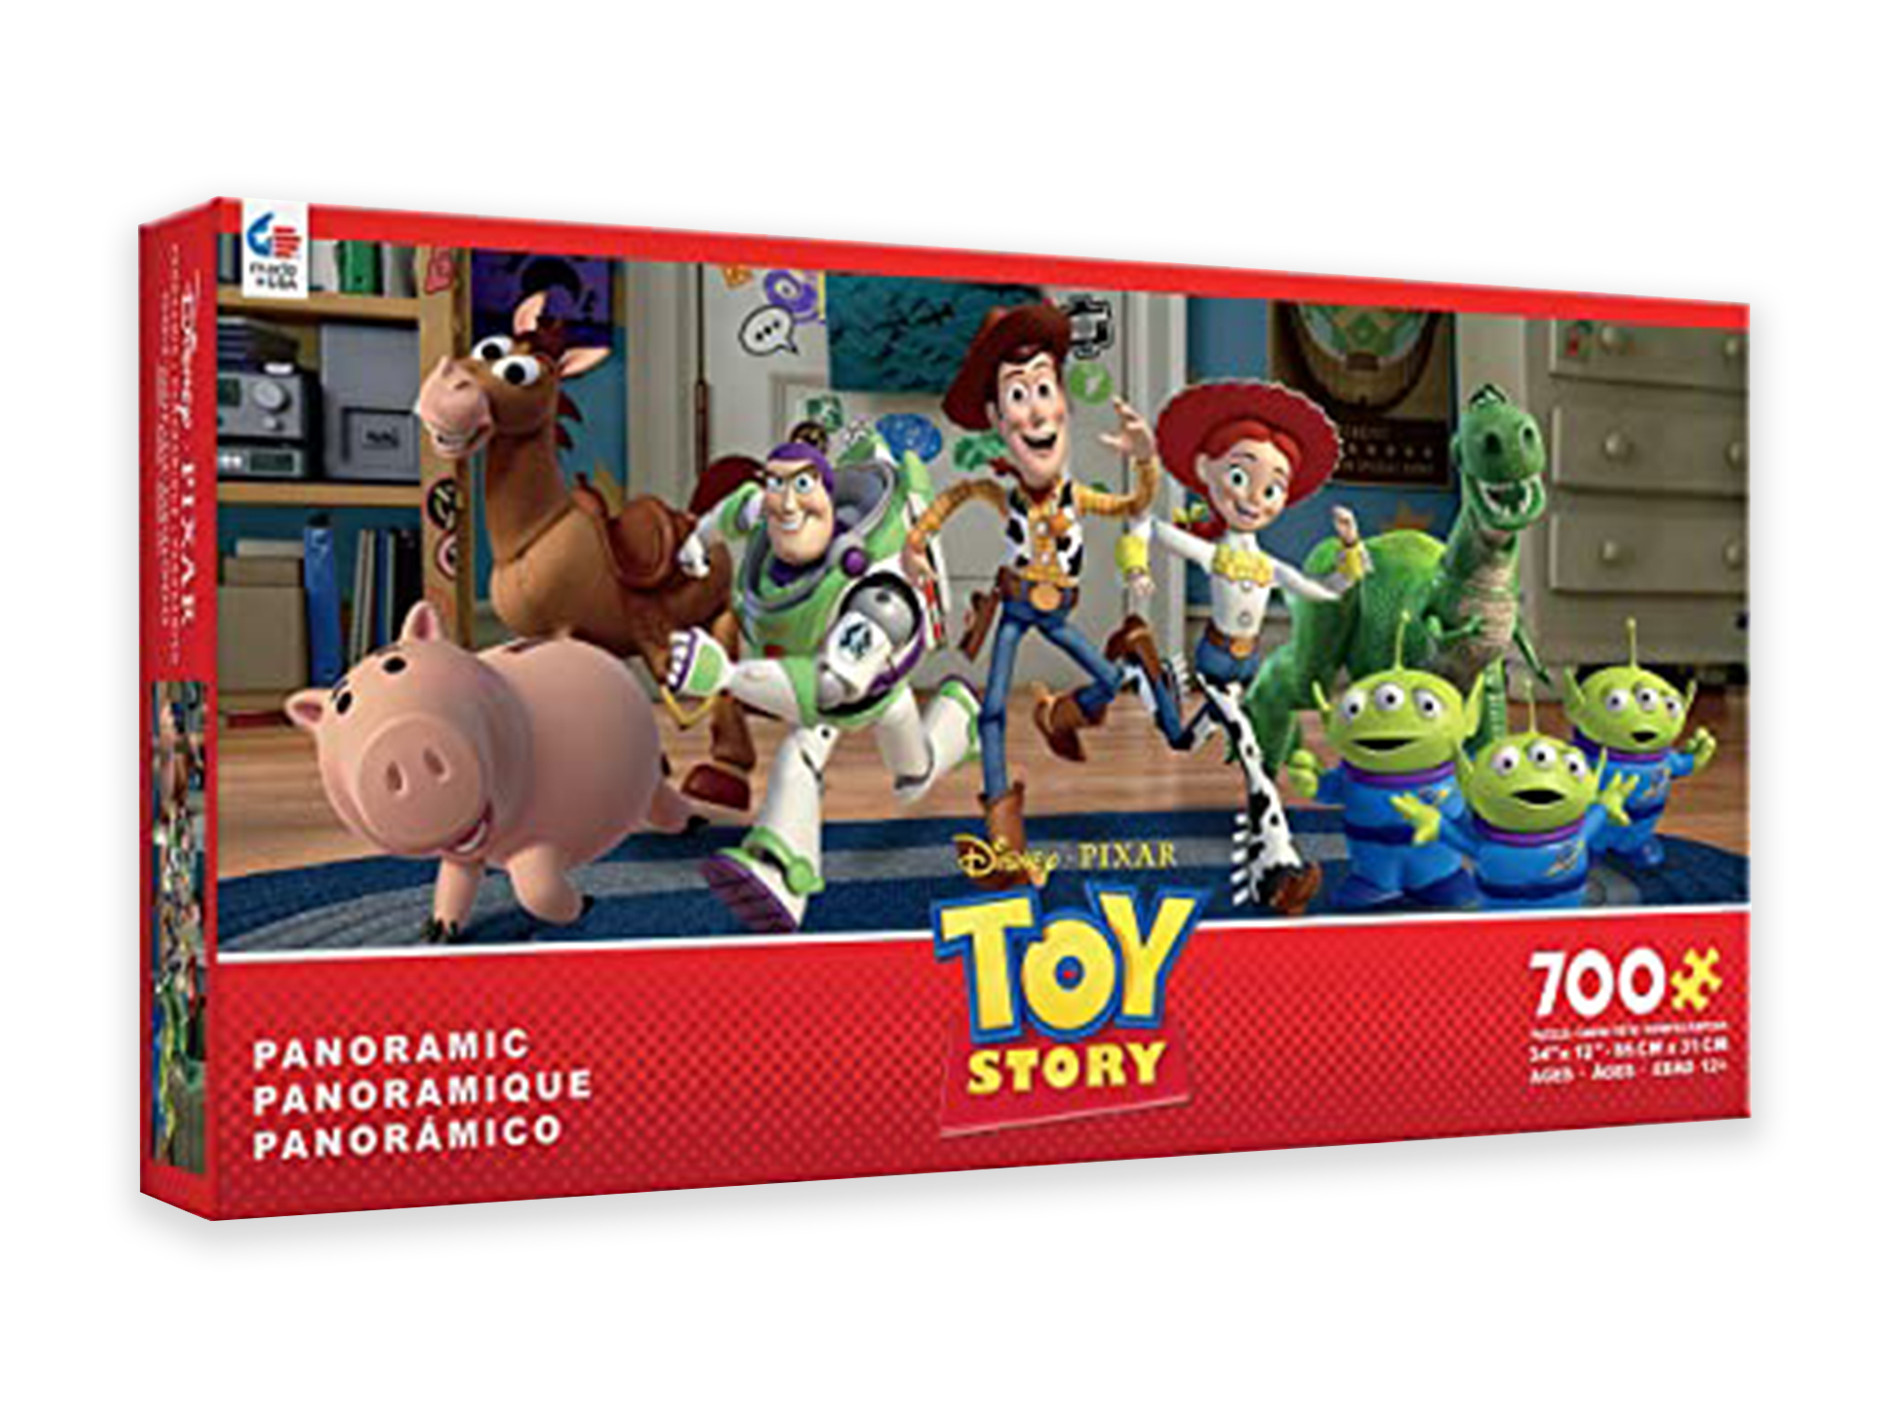 Disney Pixar TOY STORY 700 Piece Panoramic Puzzle - Size 86cm * 31cm